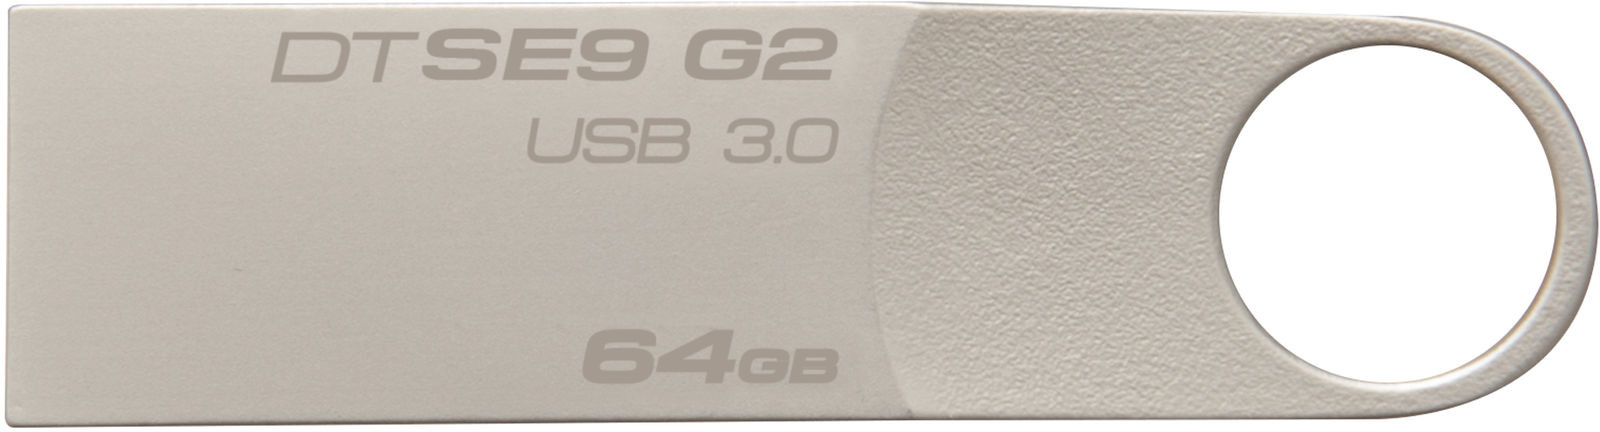 KINGSTON USB-Stick DataTraveler 64 GB DTSE9G2/64GB